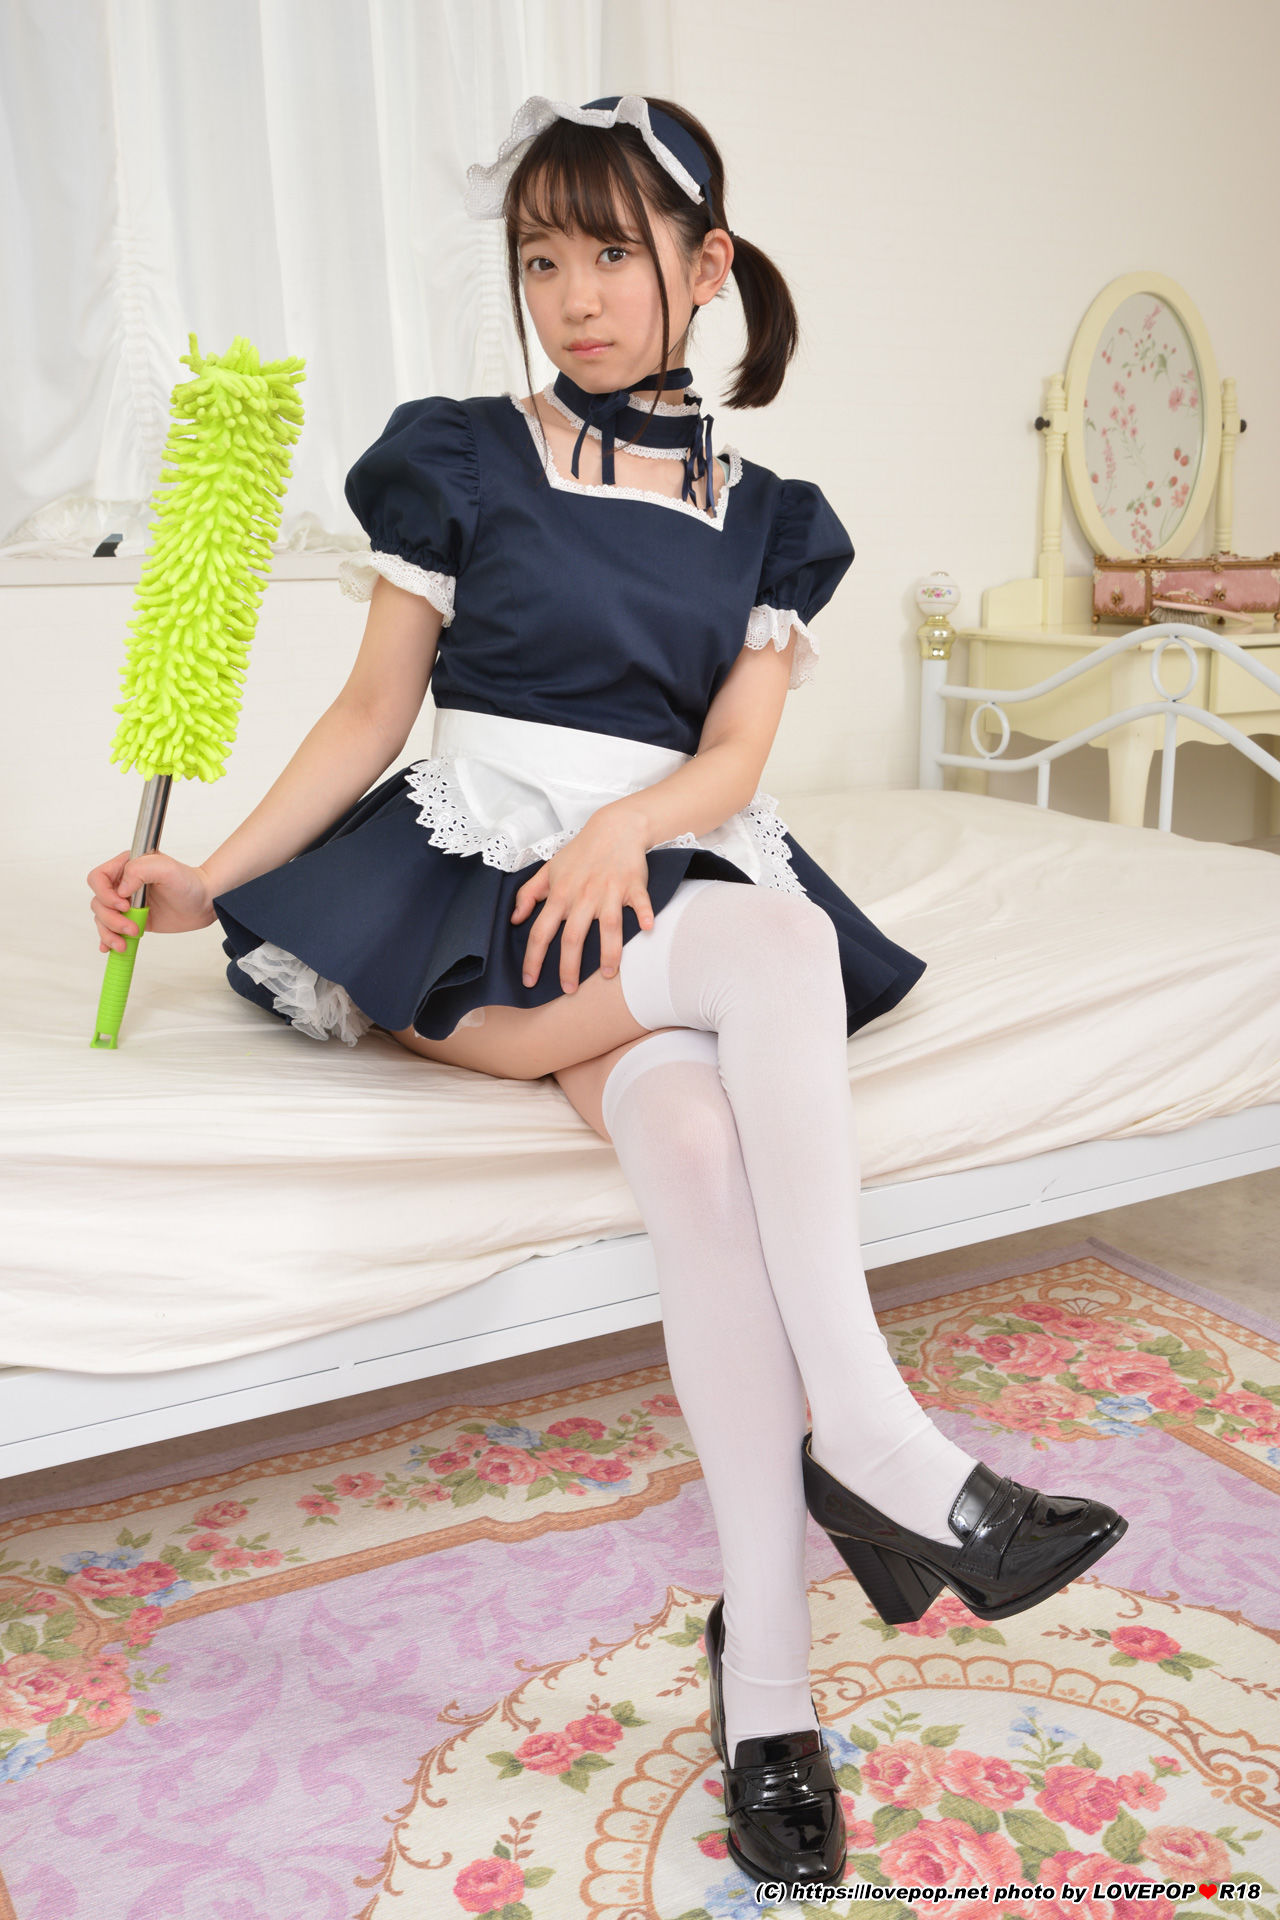 [LOVEPOP] Special Maid Collection - Yura Kano 架乃ゆら Photoset 03